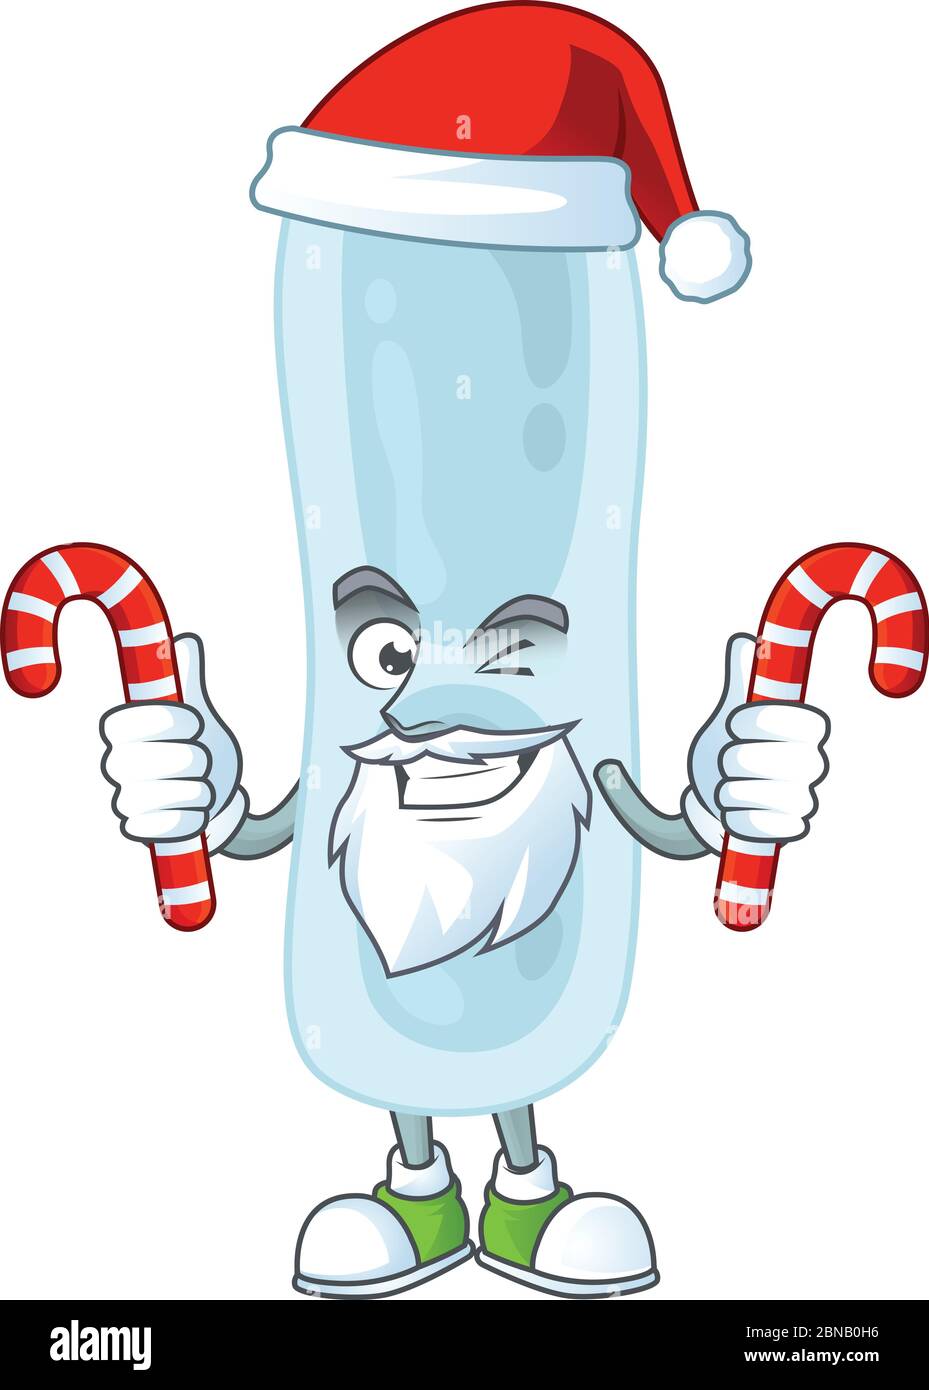 Cartoon character of klebsiella pneumoniae as a Santa having candies Stock Vector